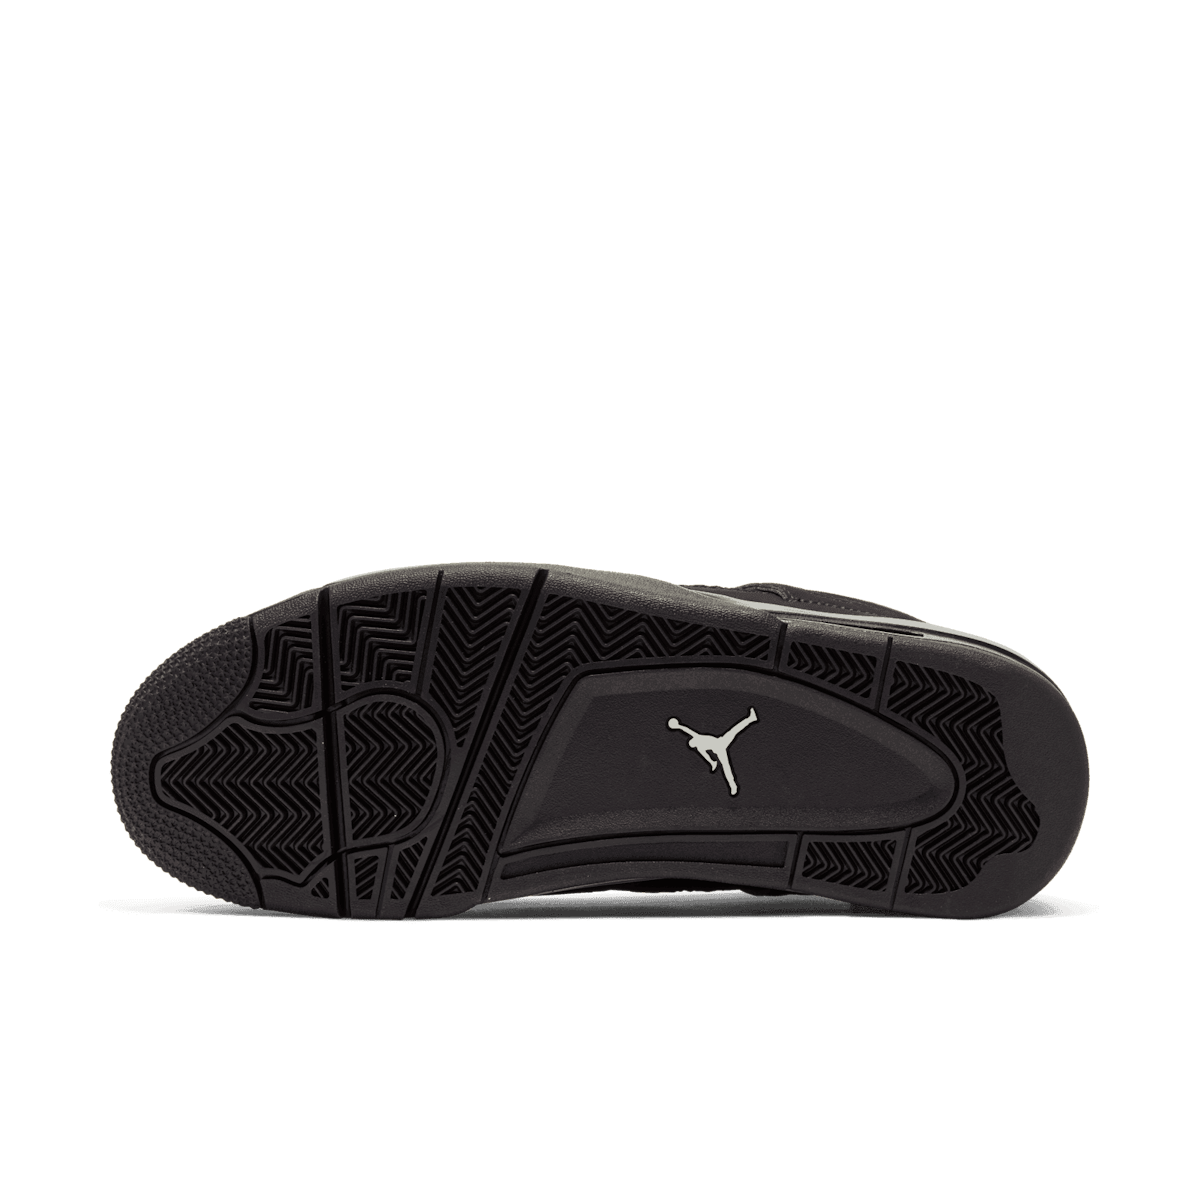 Air Jordan 4 Black Cat, CU1110-010, The Sole Supplier